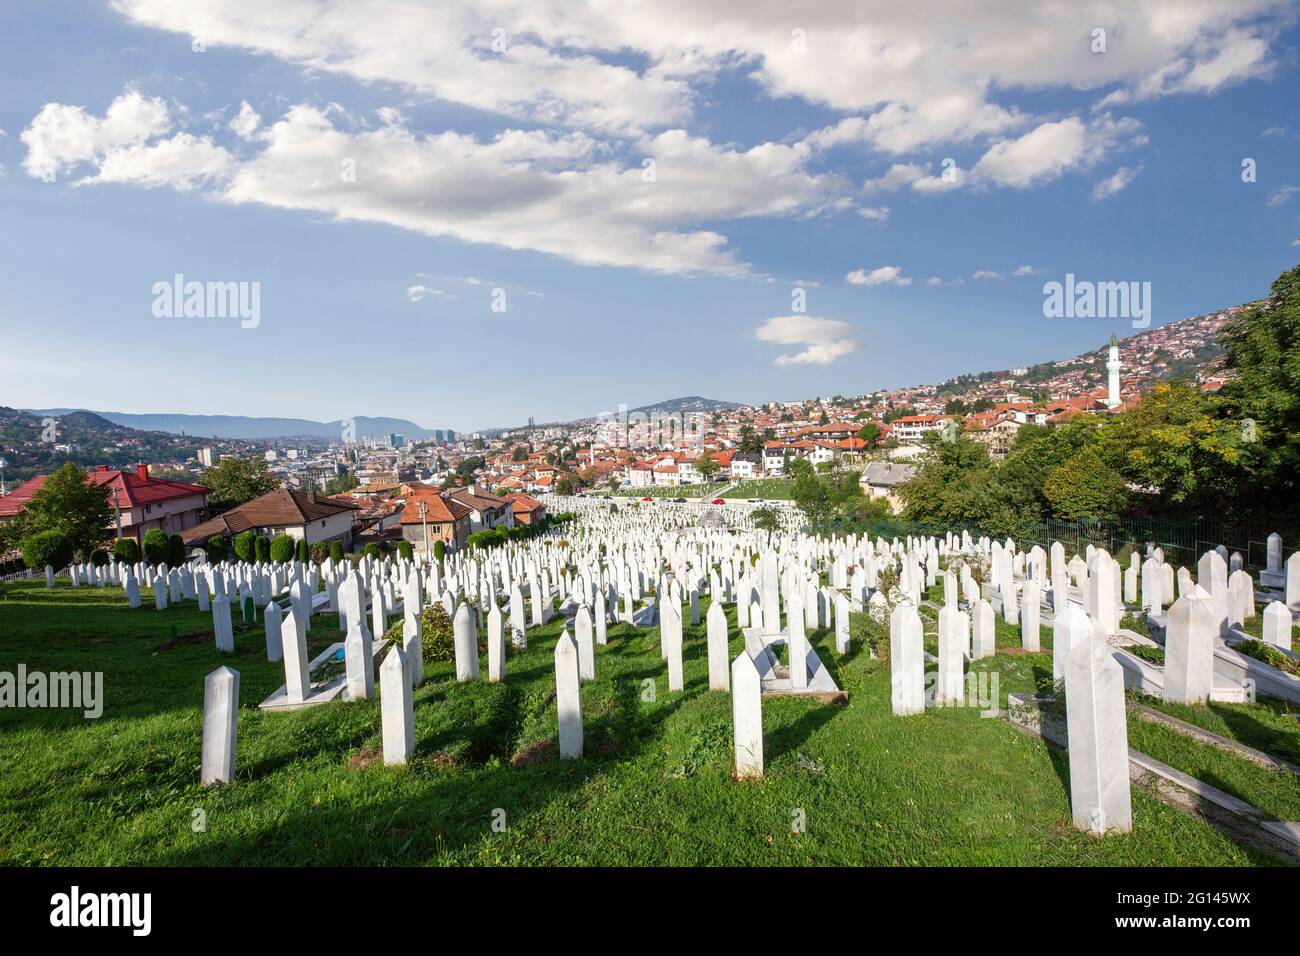 Muslim cemetery of Kovaci dedicated to the victims of the Bosnian war, in Sarajevo, Bosnia and Herzegovina. Stock Photo